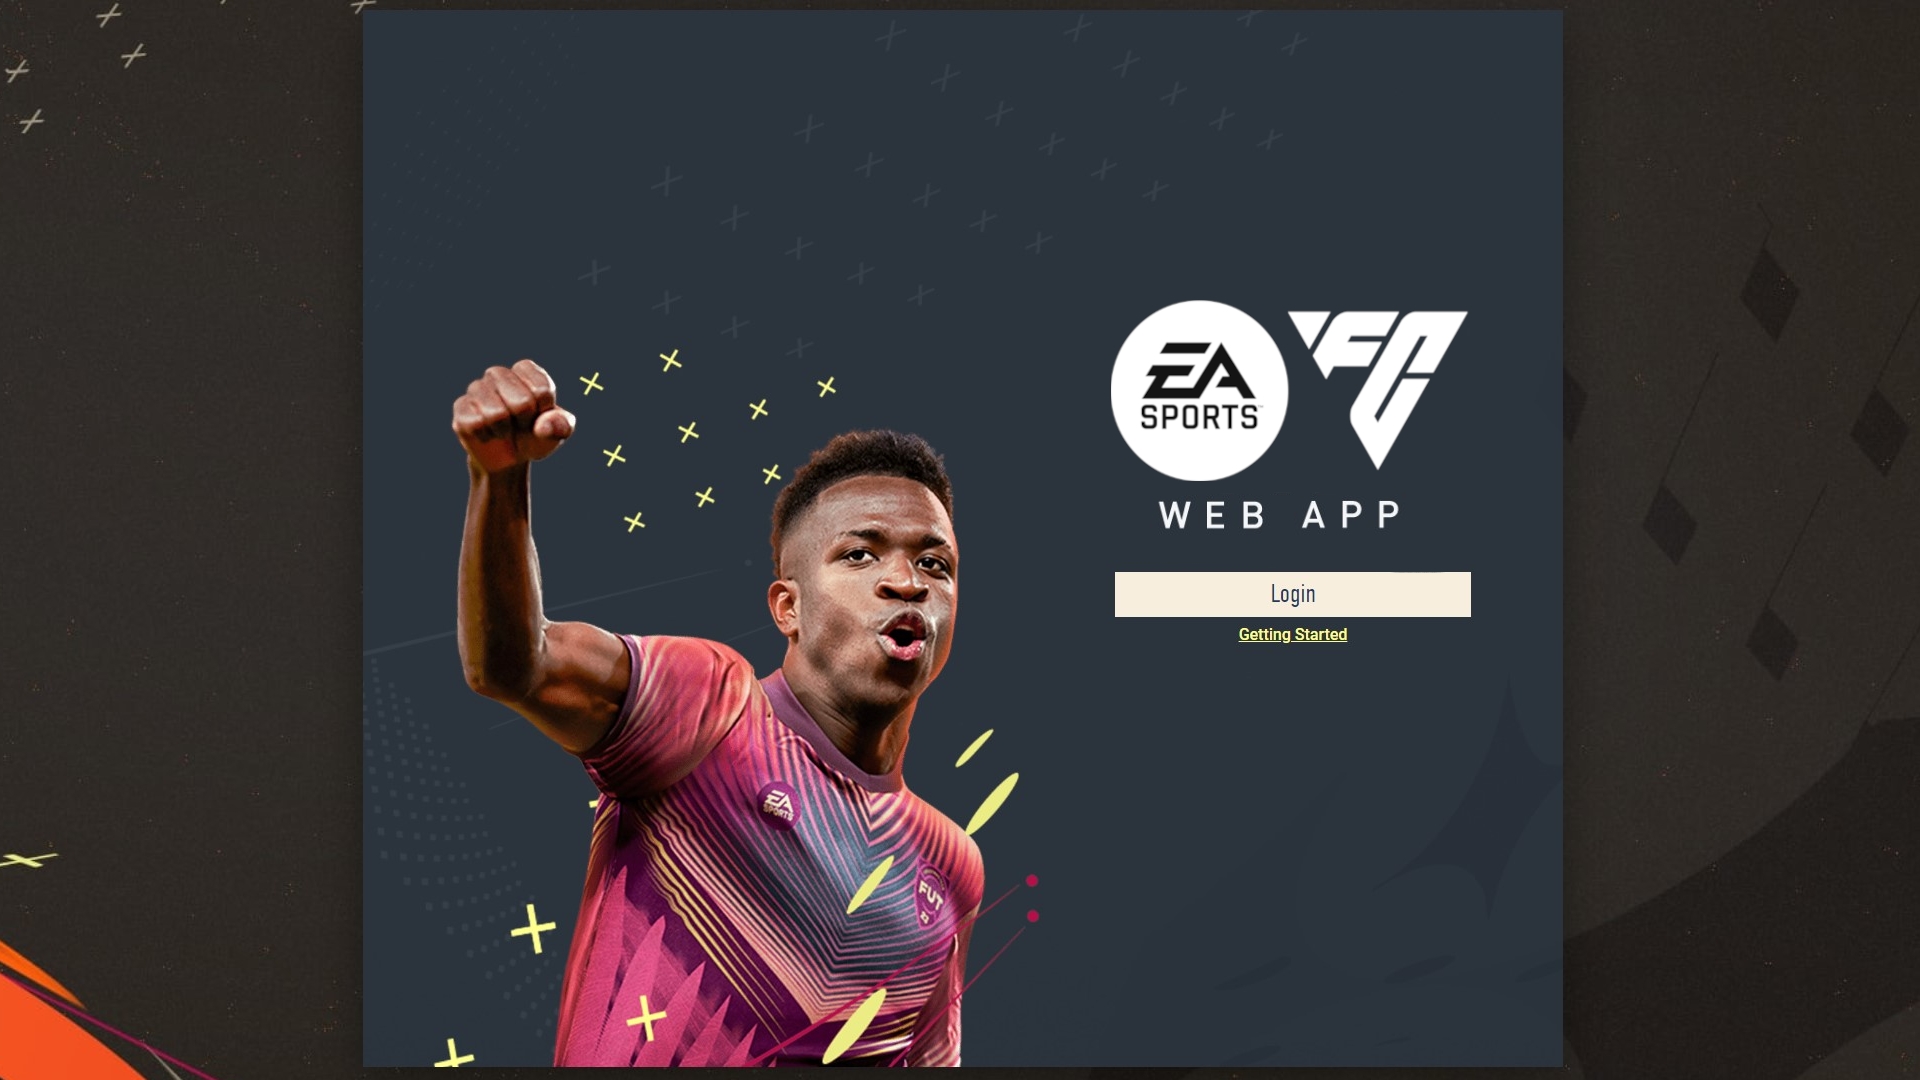 web app: When will EA FC 24 web app release? Exploring all news